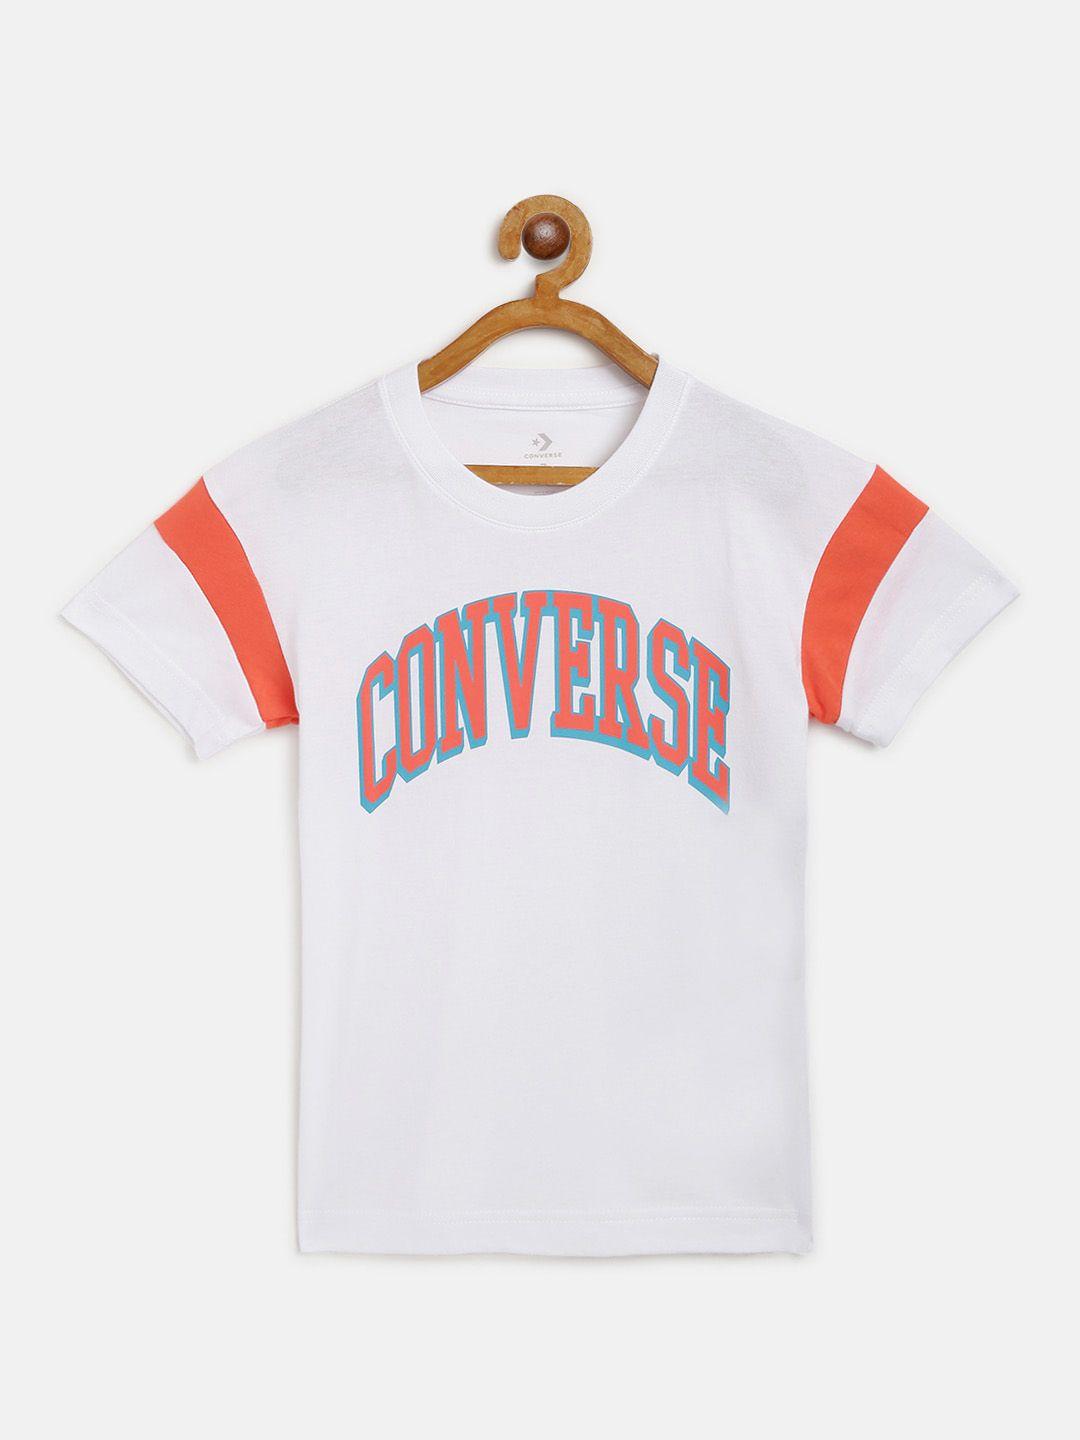 Converse Boys White & Coral Orange Brand Logo Print Round Neck T-shirt